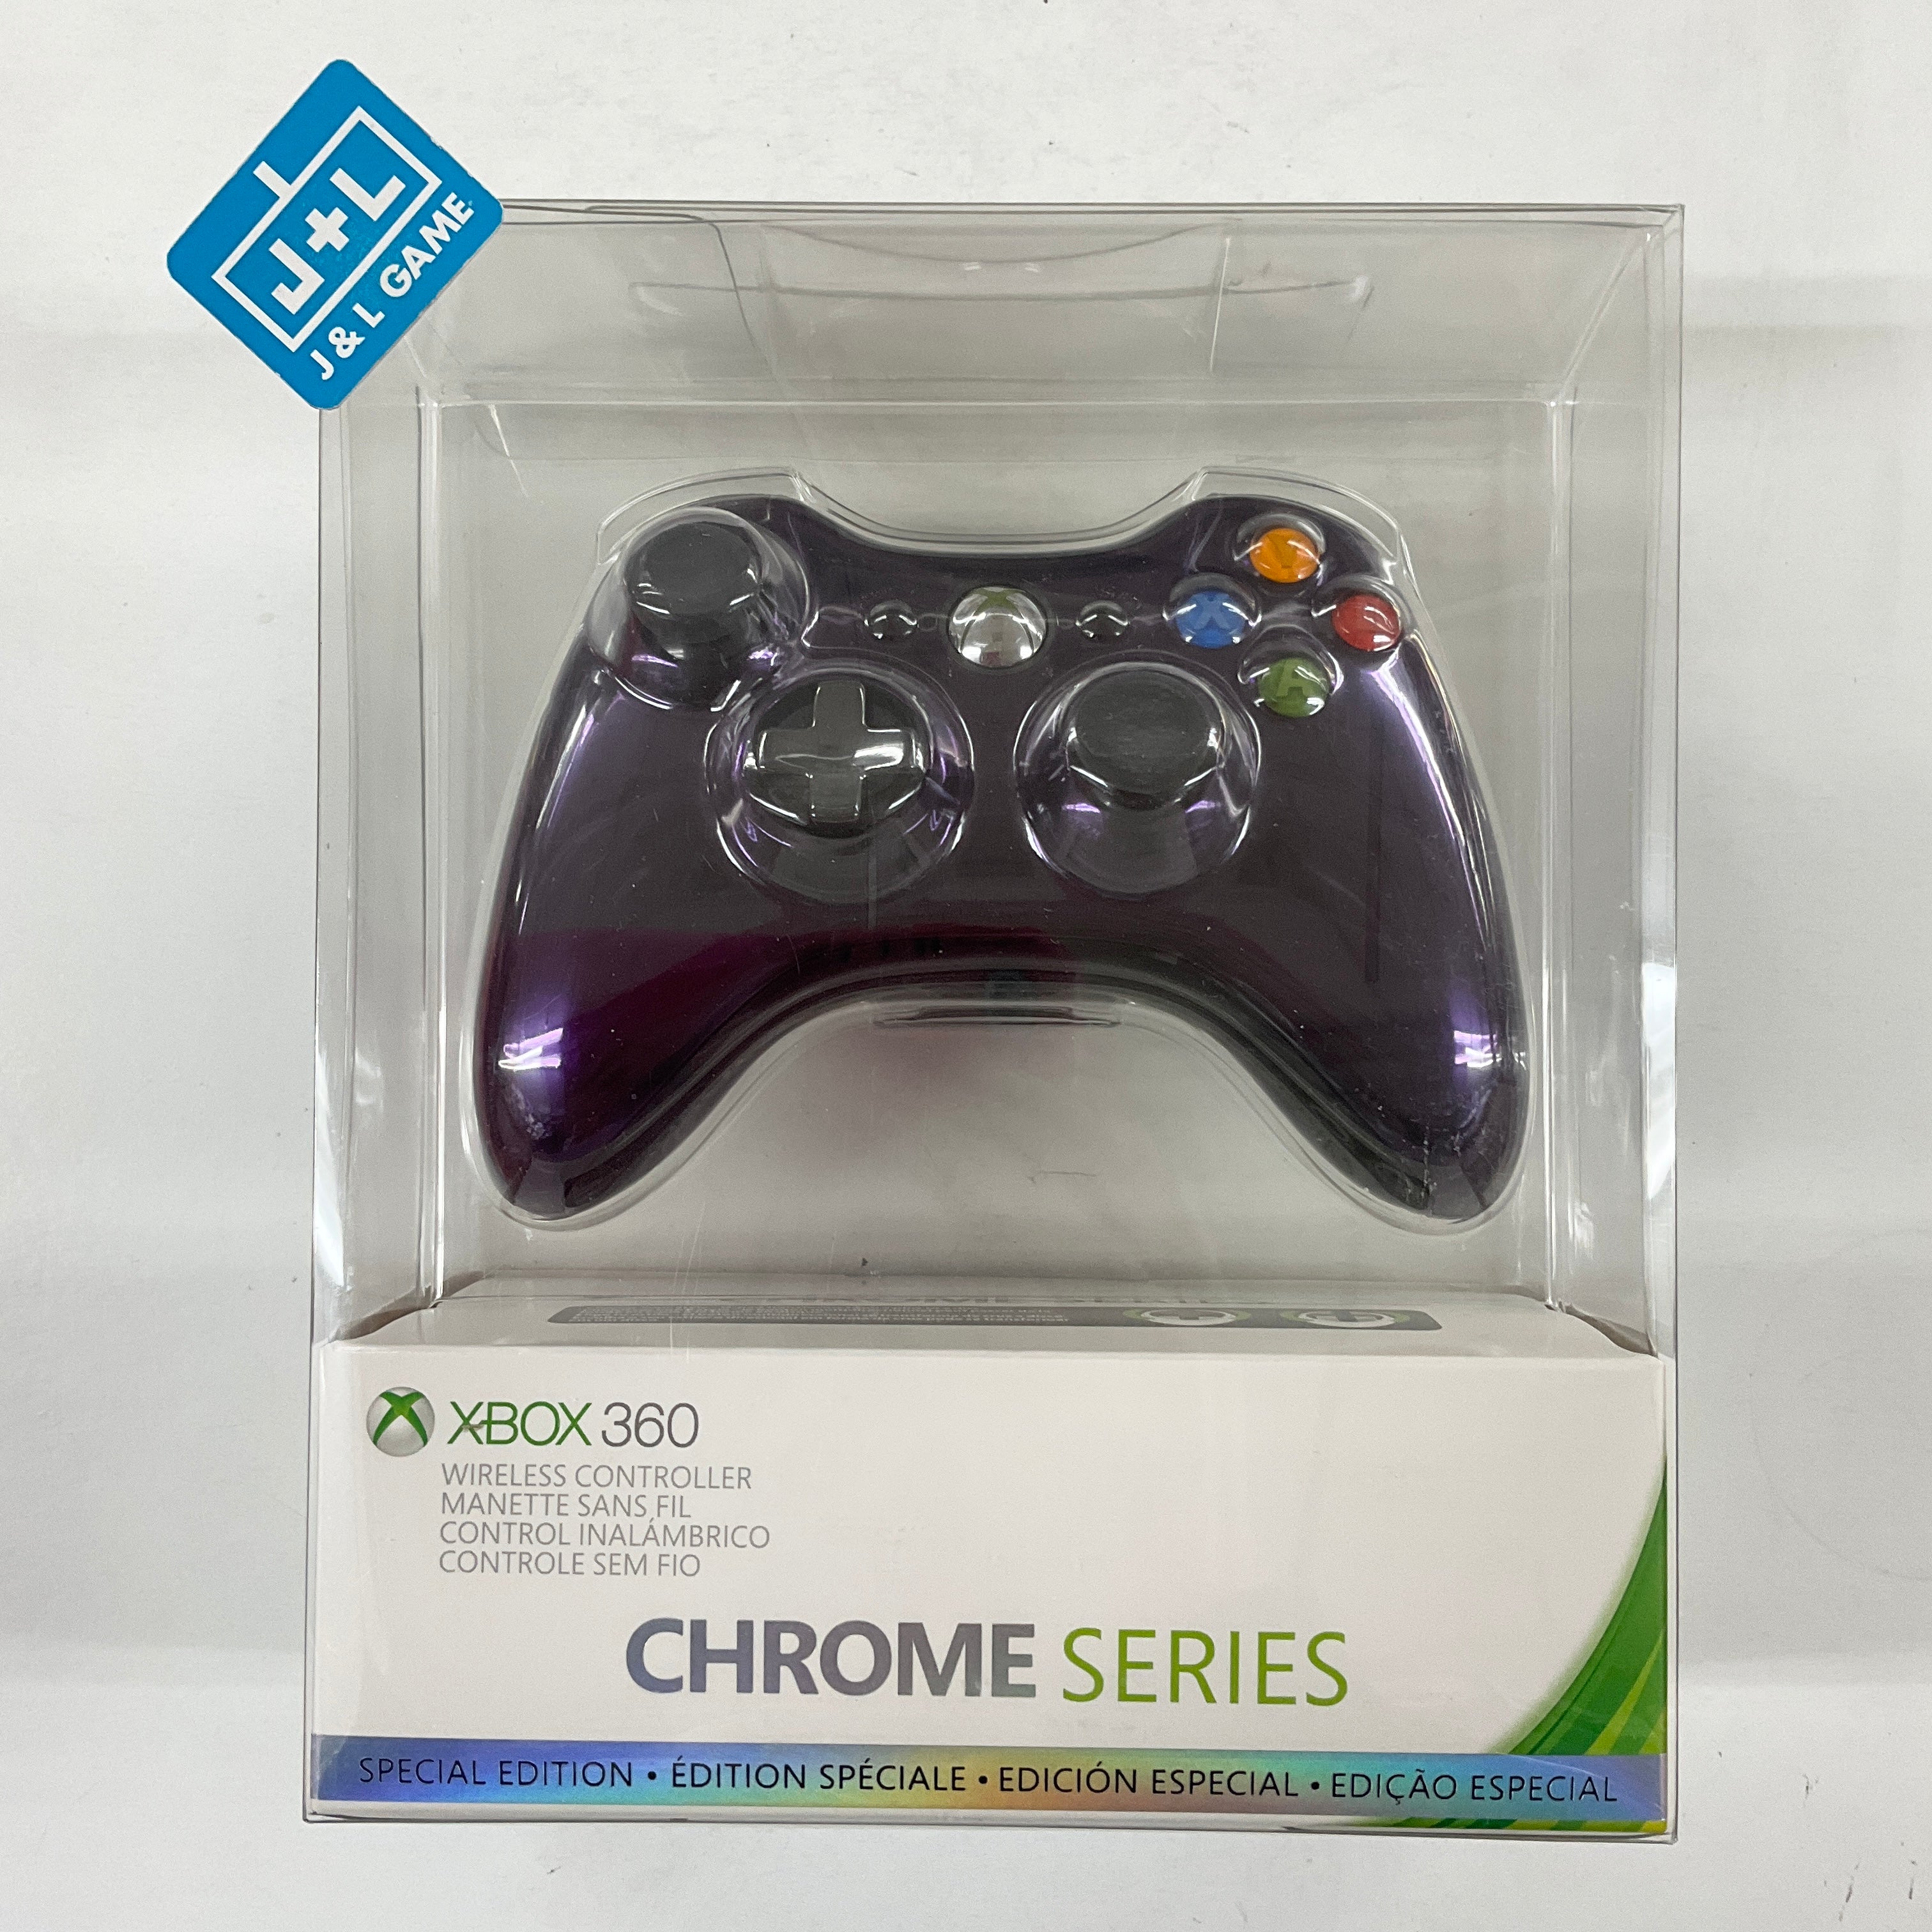 Microsoft Xbox 360 Chrome Series Wireless Controller (Purple) - Xbox 360